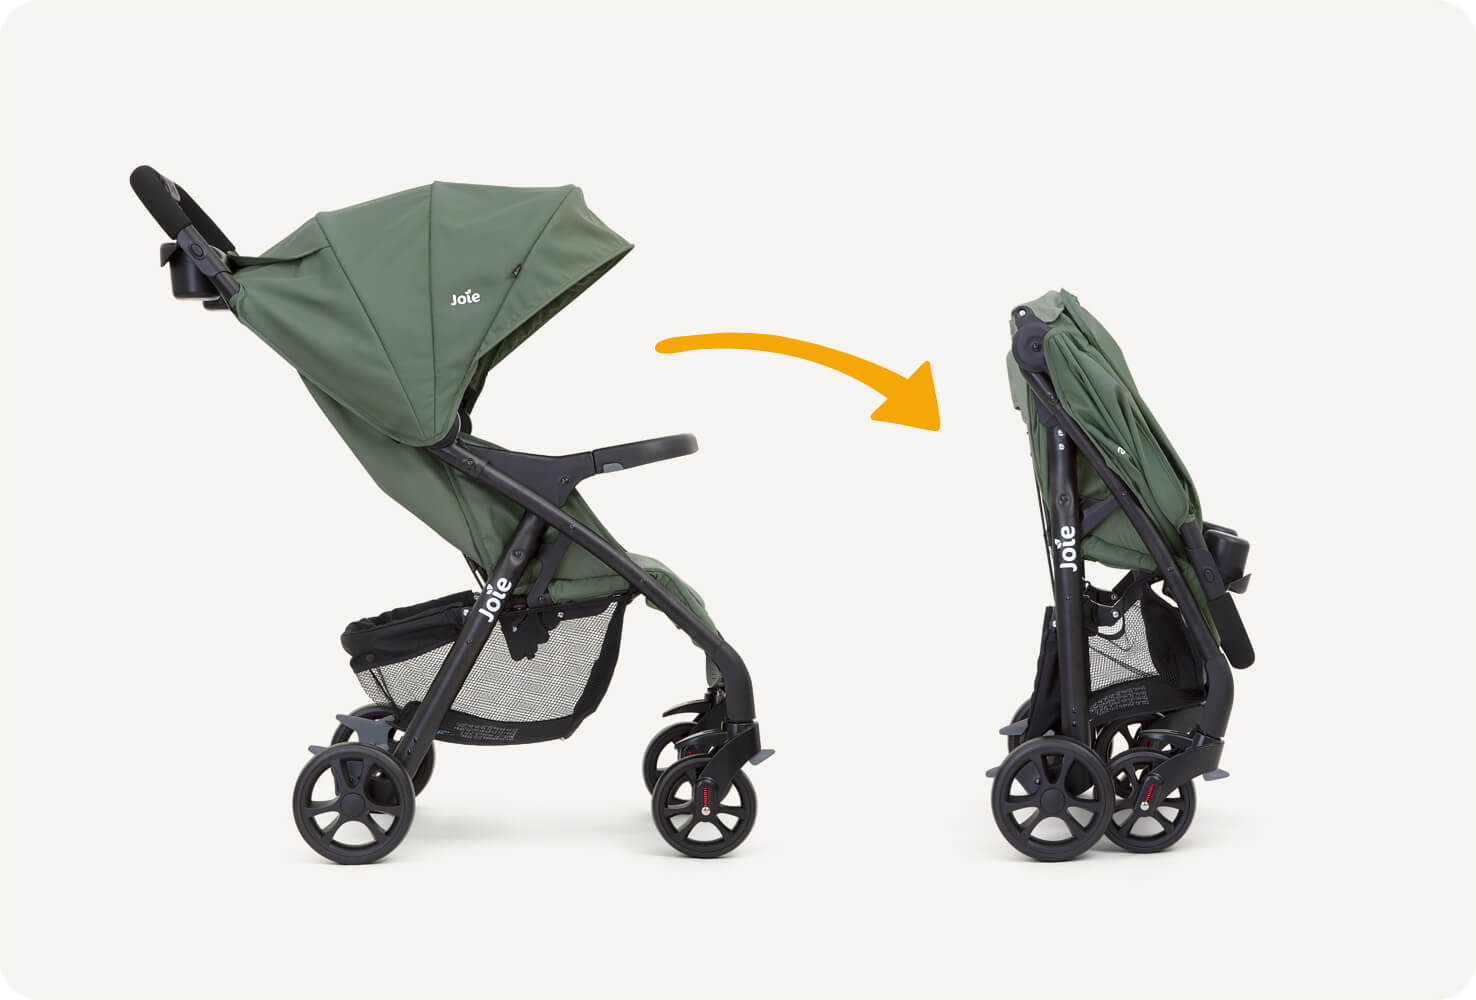   Side profile of Joie light green muze lx stroller next to folded up Joie light green muze lx stroller.